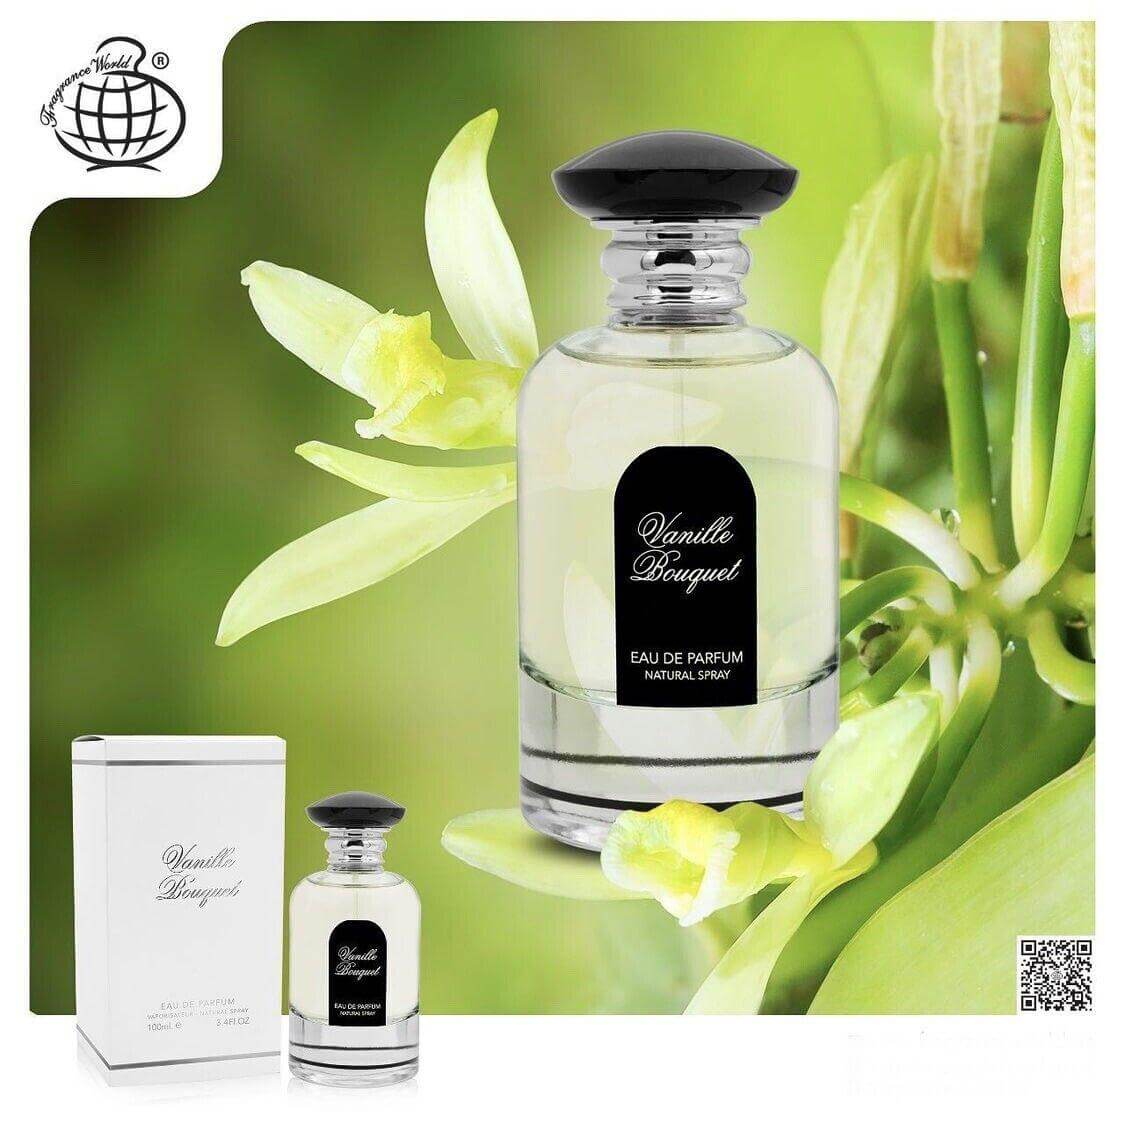 Vanille Bouquet Perfume Eau De Parfum 100Ml By Fragrance World (Inspired By Nasamat Oud Bouquet)